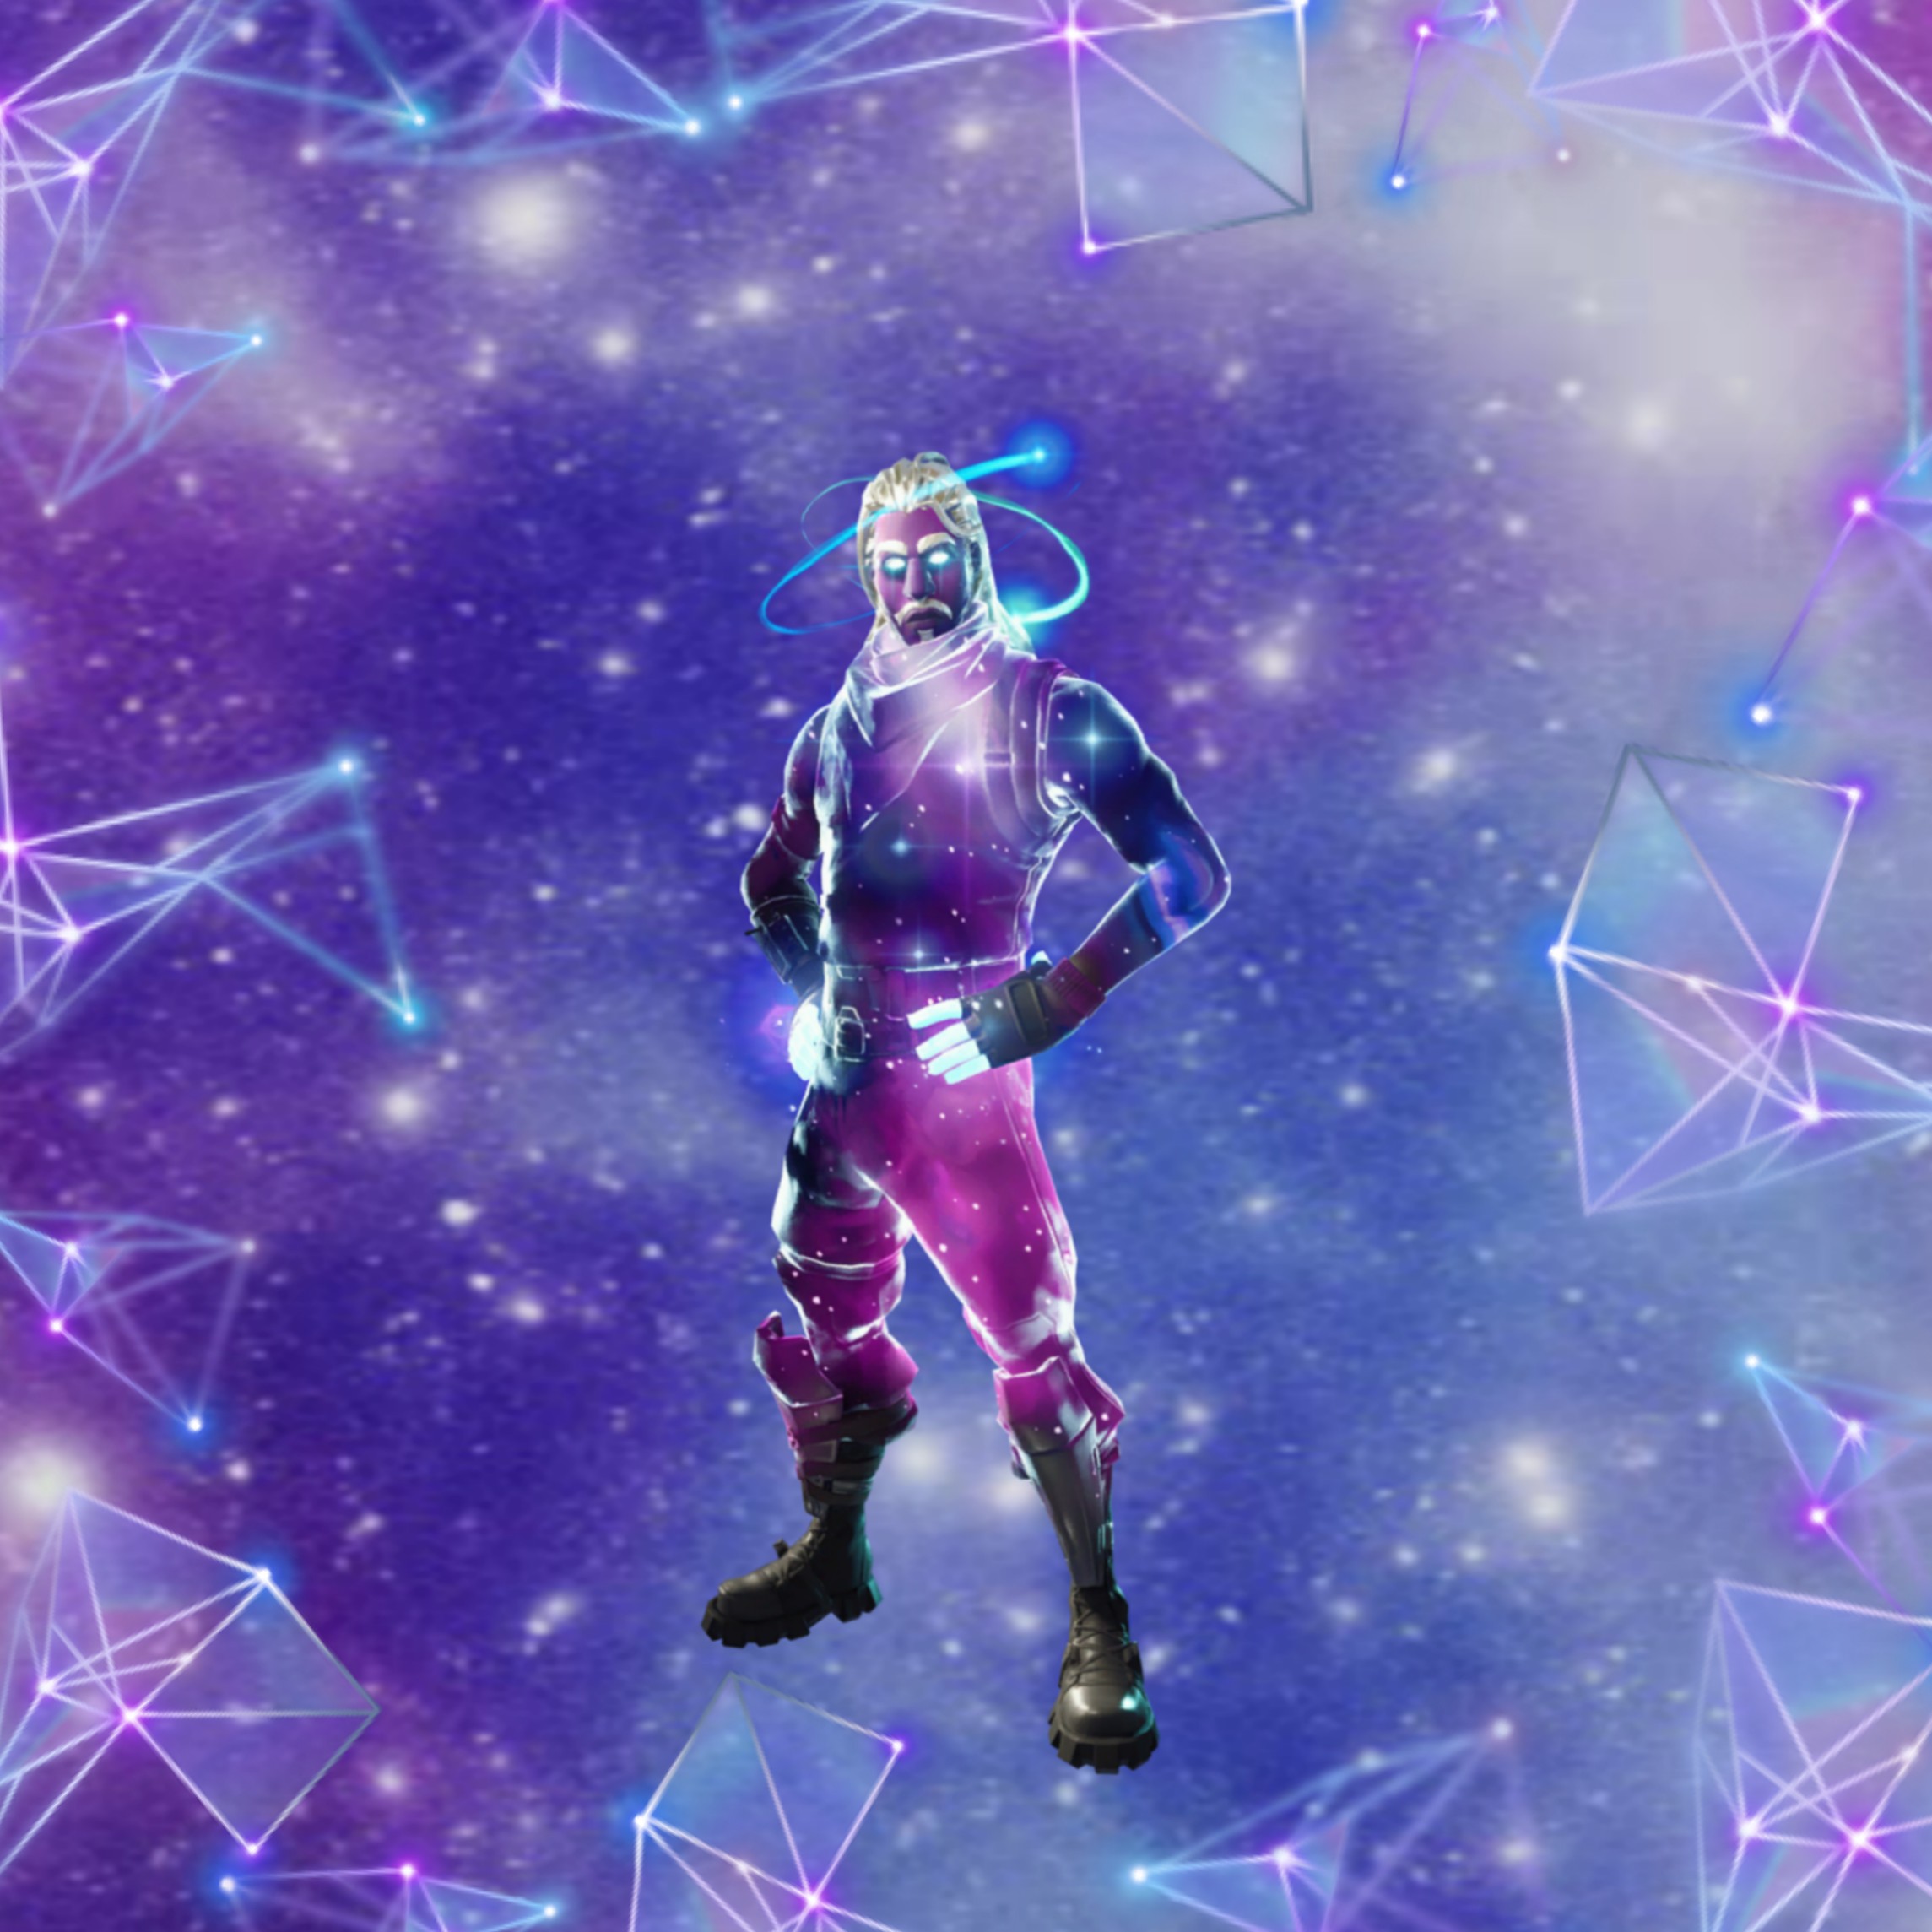 fortnite skin galaxy - Image by jolisido8 - 2289 x 2289 jpeg 510kB